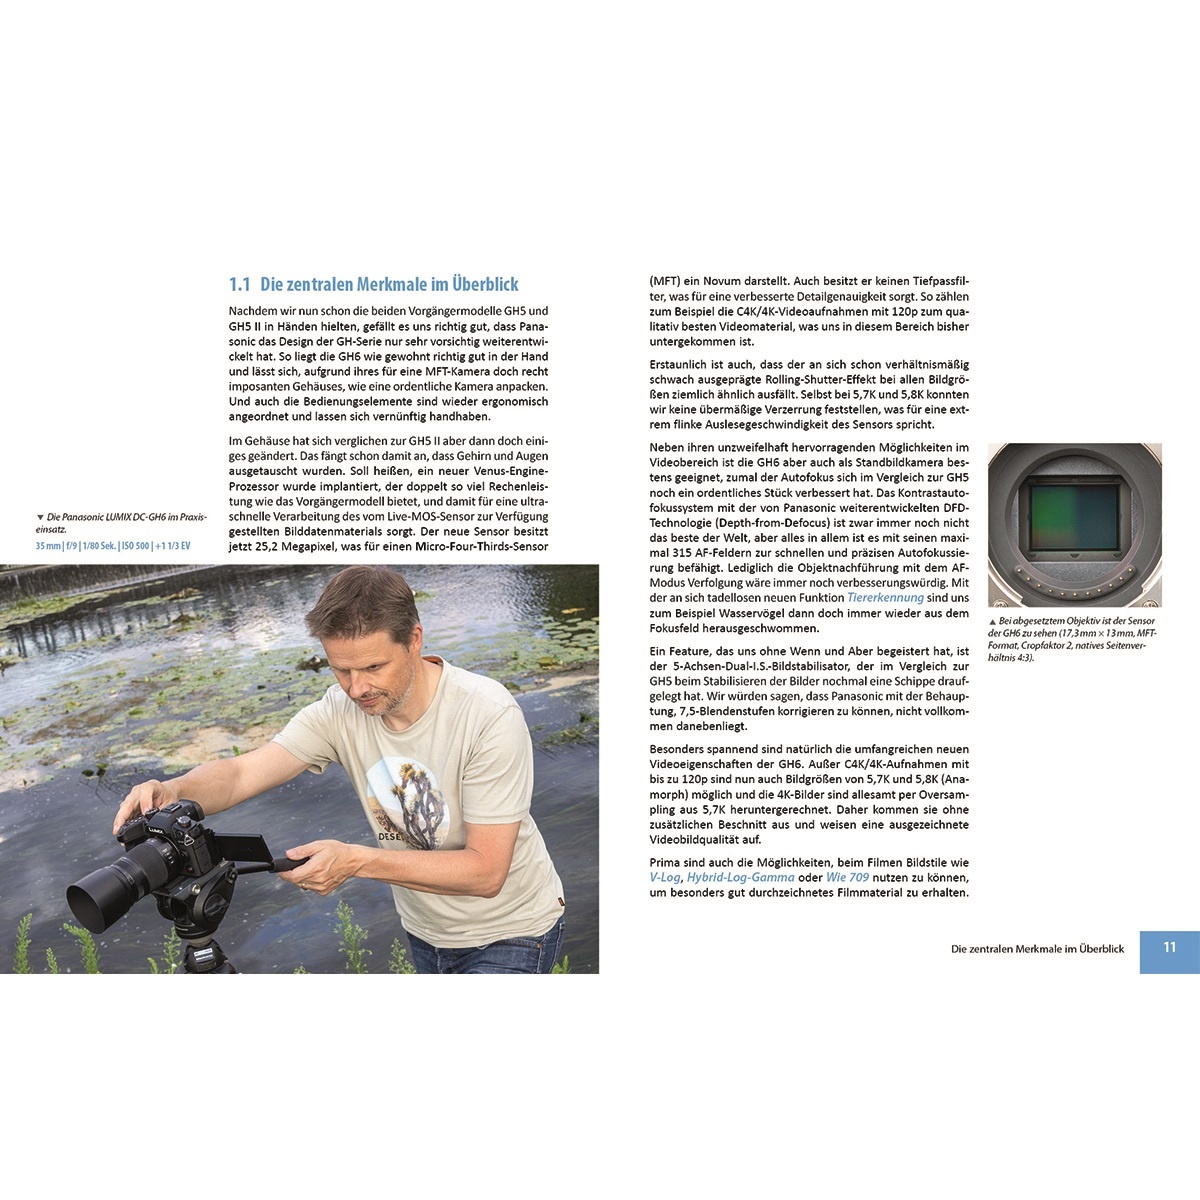 umfangreiche DC-GH6 Panasonic Kamera LUMIX Das Praxisbuch - zu Ihrer